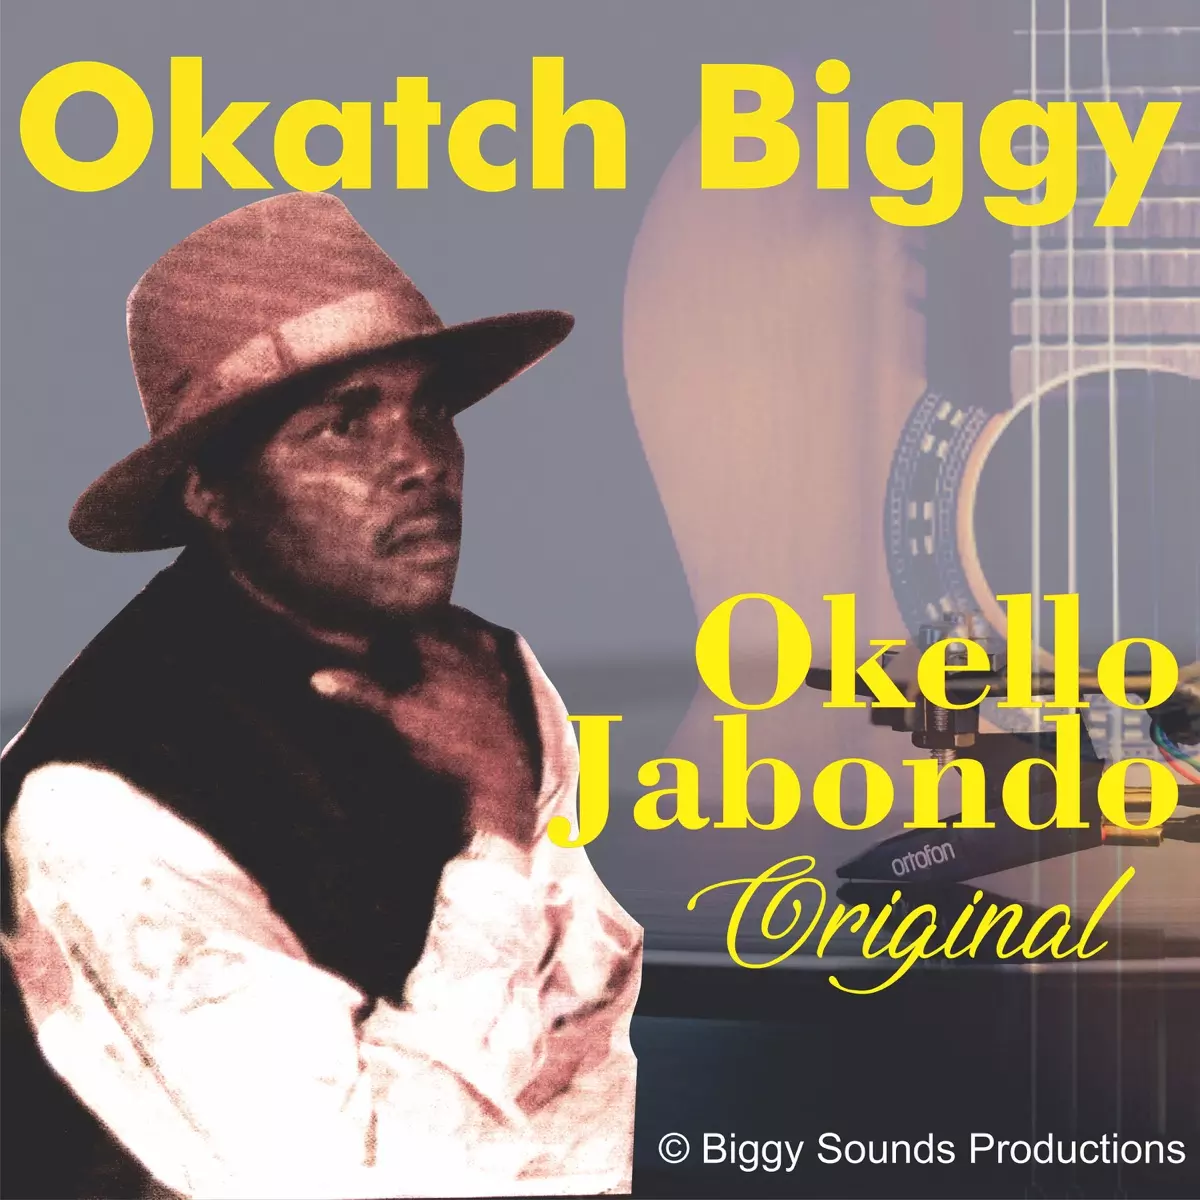 Okello Jabondo by Okatch Biggy on Apple Music